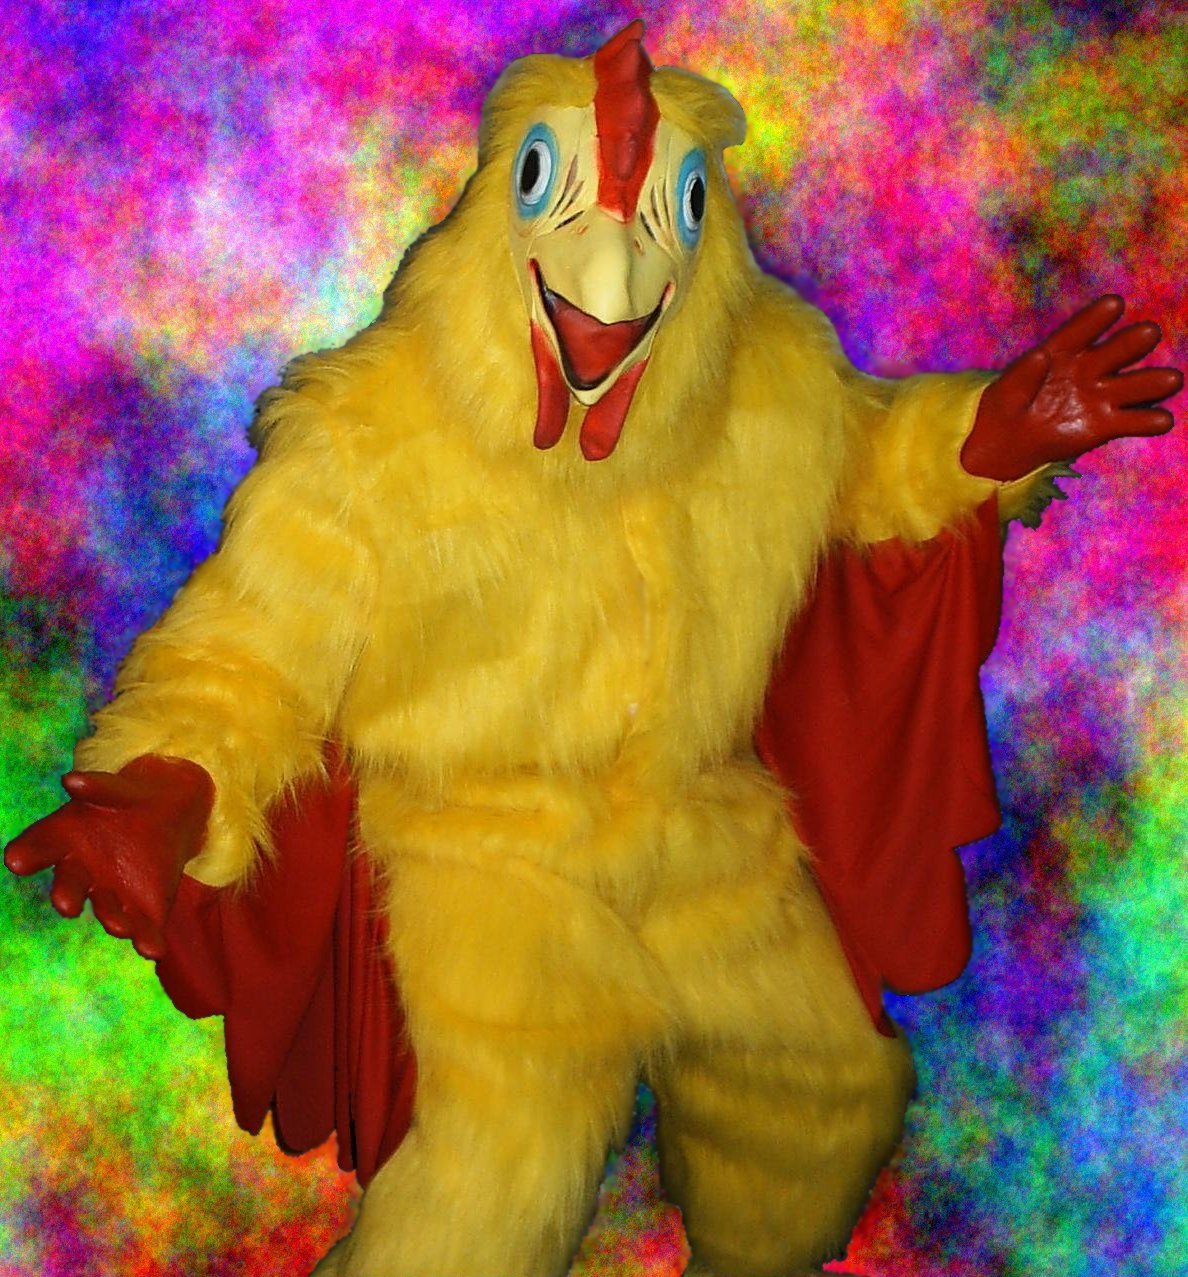 https://blogger.googleusercontent.com/img/b/R29vZ2xl/AVvXsEhnP2xy1ckxJi9tO6tsSogfgt-PmC-kCOPMYjVjcakI0eb4ZGxG4xsOV2aEJWQ2hlEumYVJnClOjfxgdURBaprrIfDcgmgEqHMA35u3Ei2caKgml0IFL8uuJSvD56yWBl1FJGsln6Olc6E/s1600/Chicken_suit1.jpg